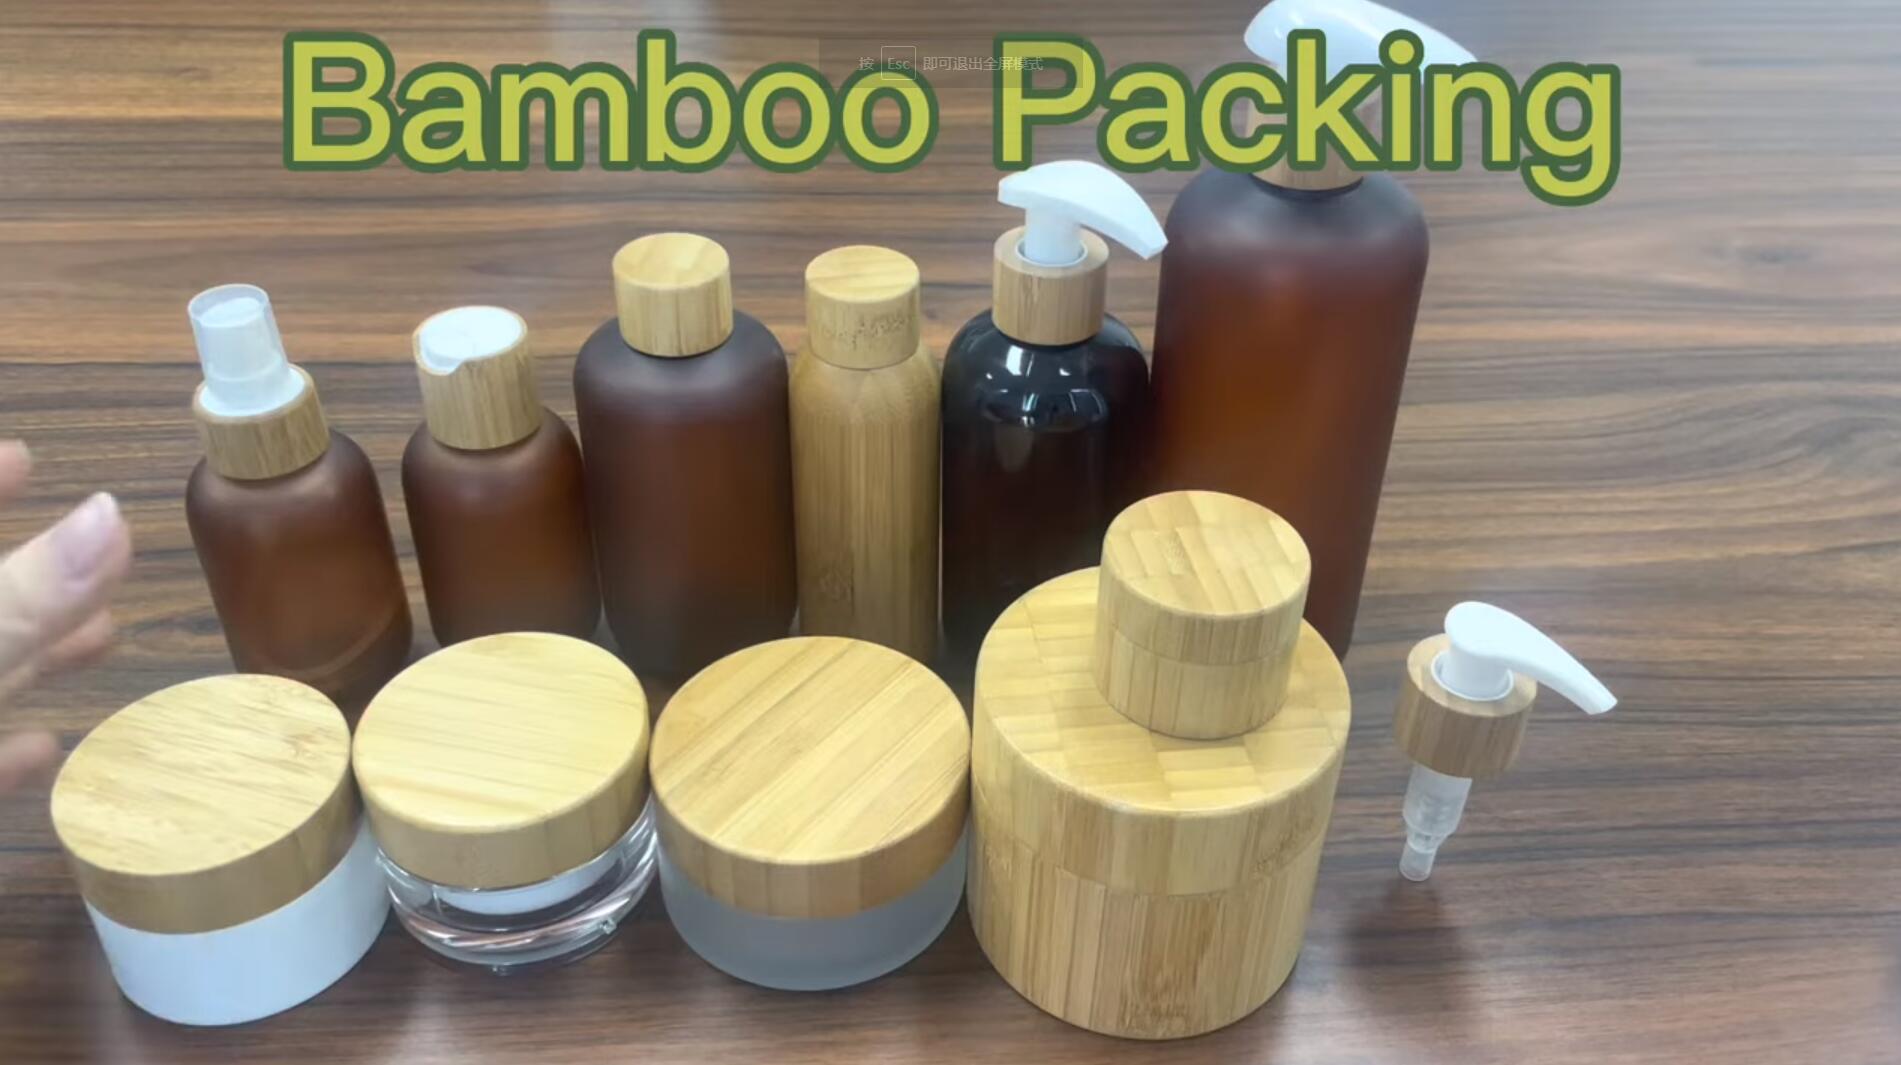 Bamboo Packing.jpg